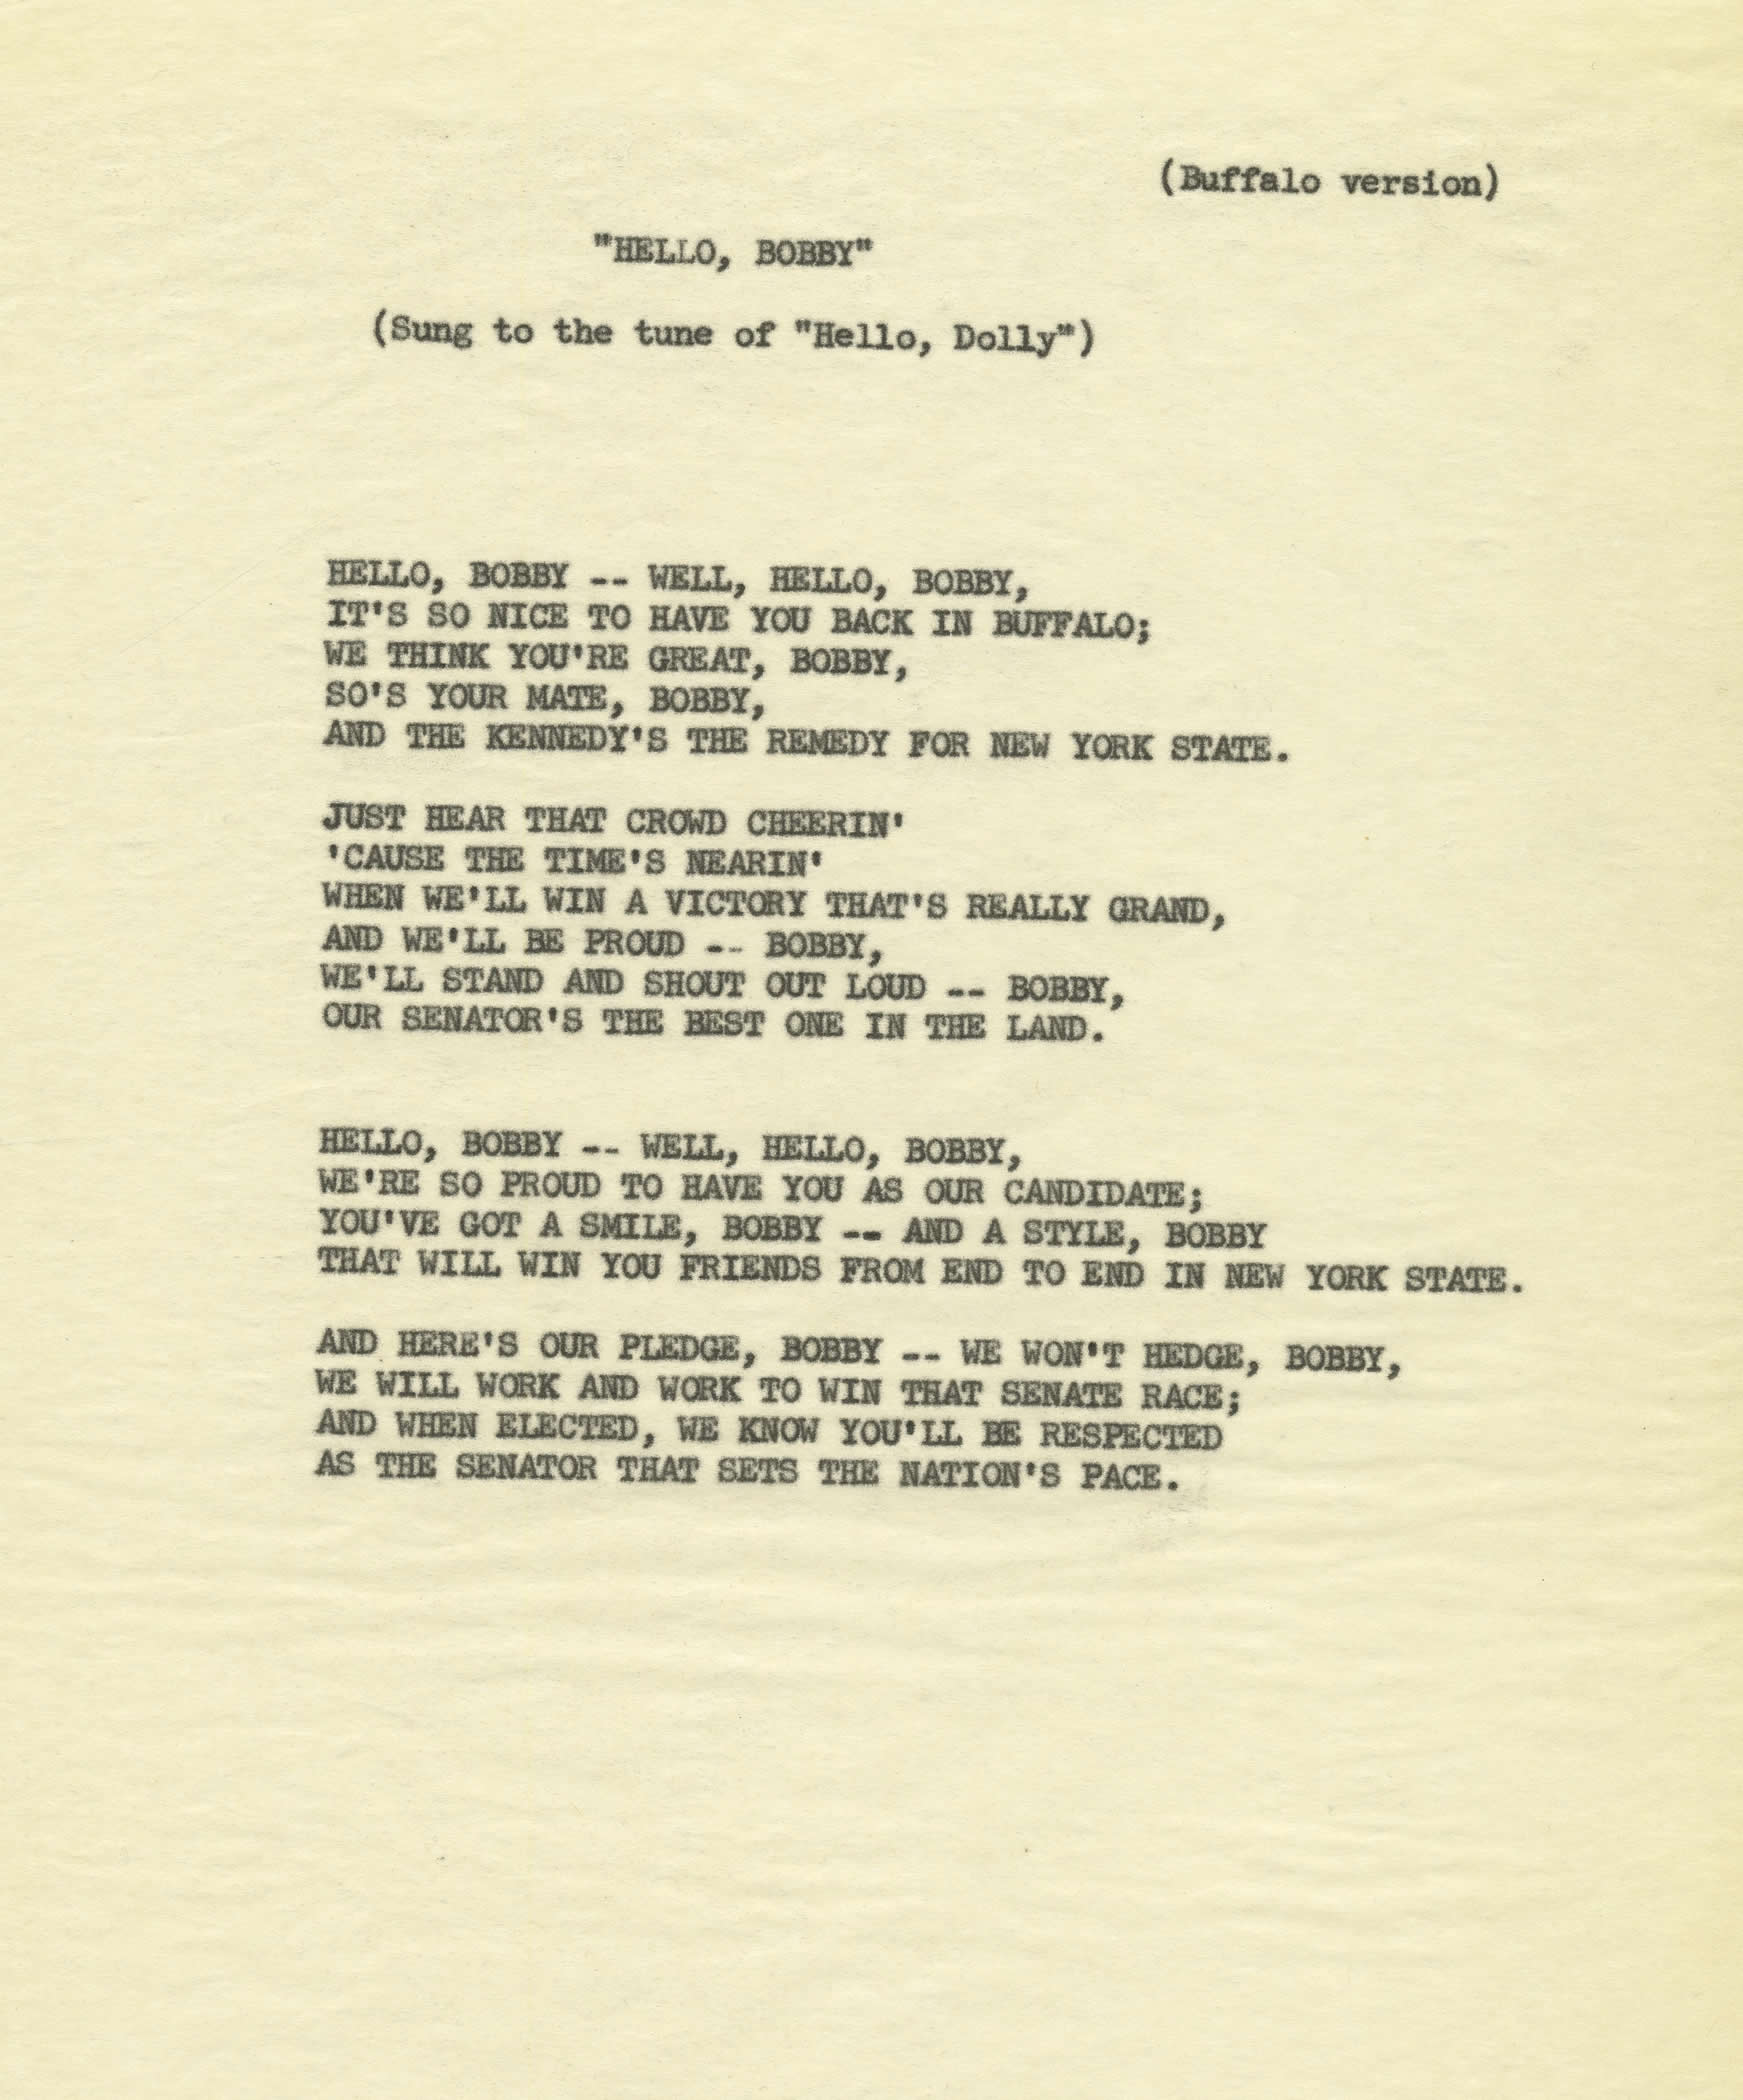 Unattributed special lyrics for “Hello, Bobby,” possibly by Sammy Cahn, circa 1964